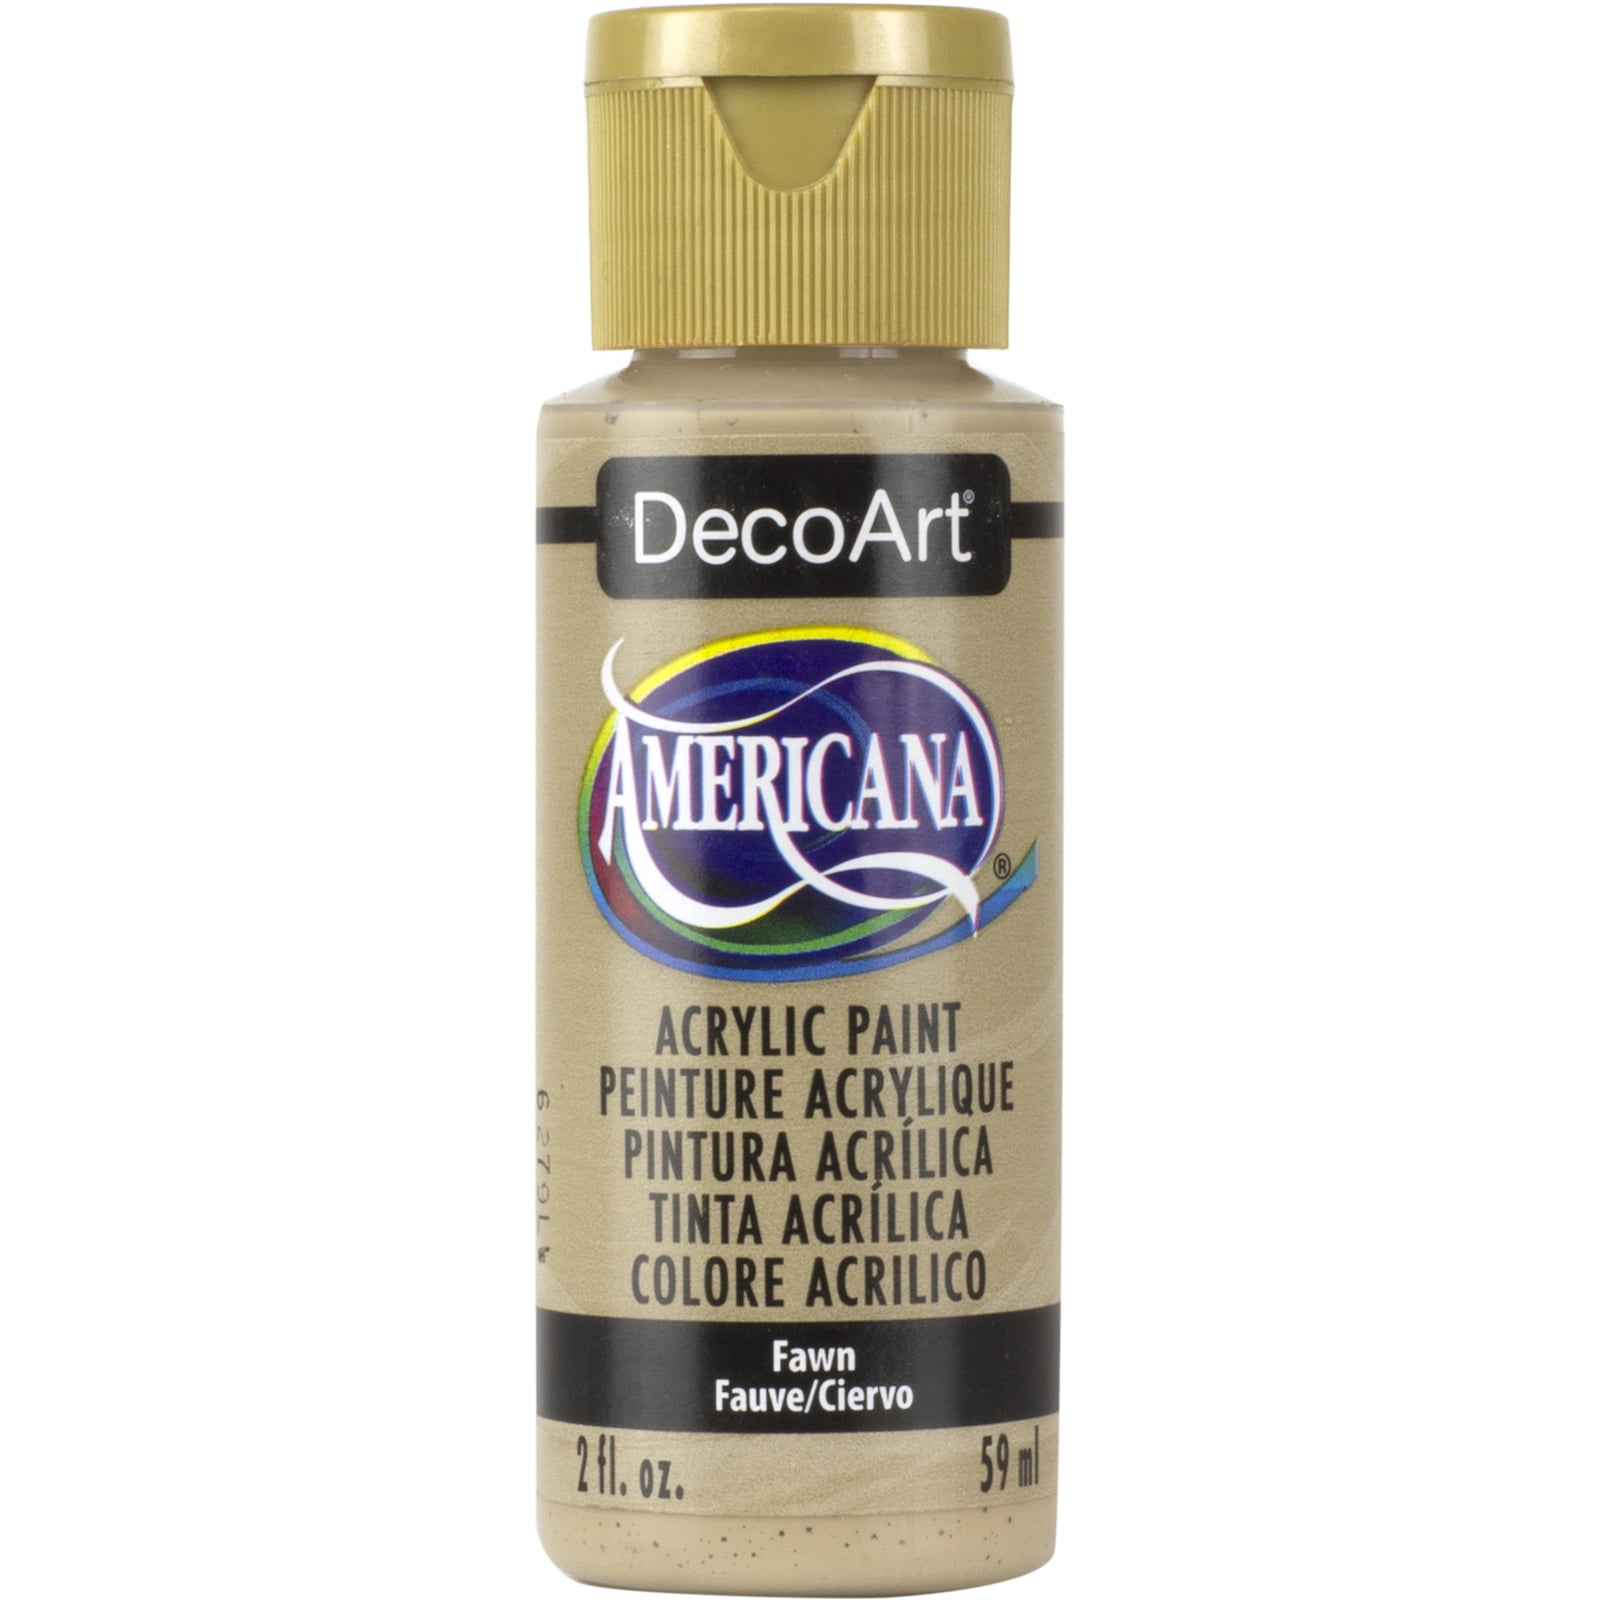 DecoArt Americana Acrylic Paint - 2 fl oz- Choose your color